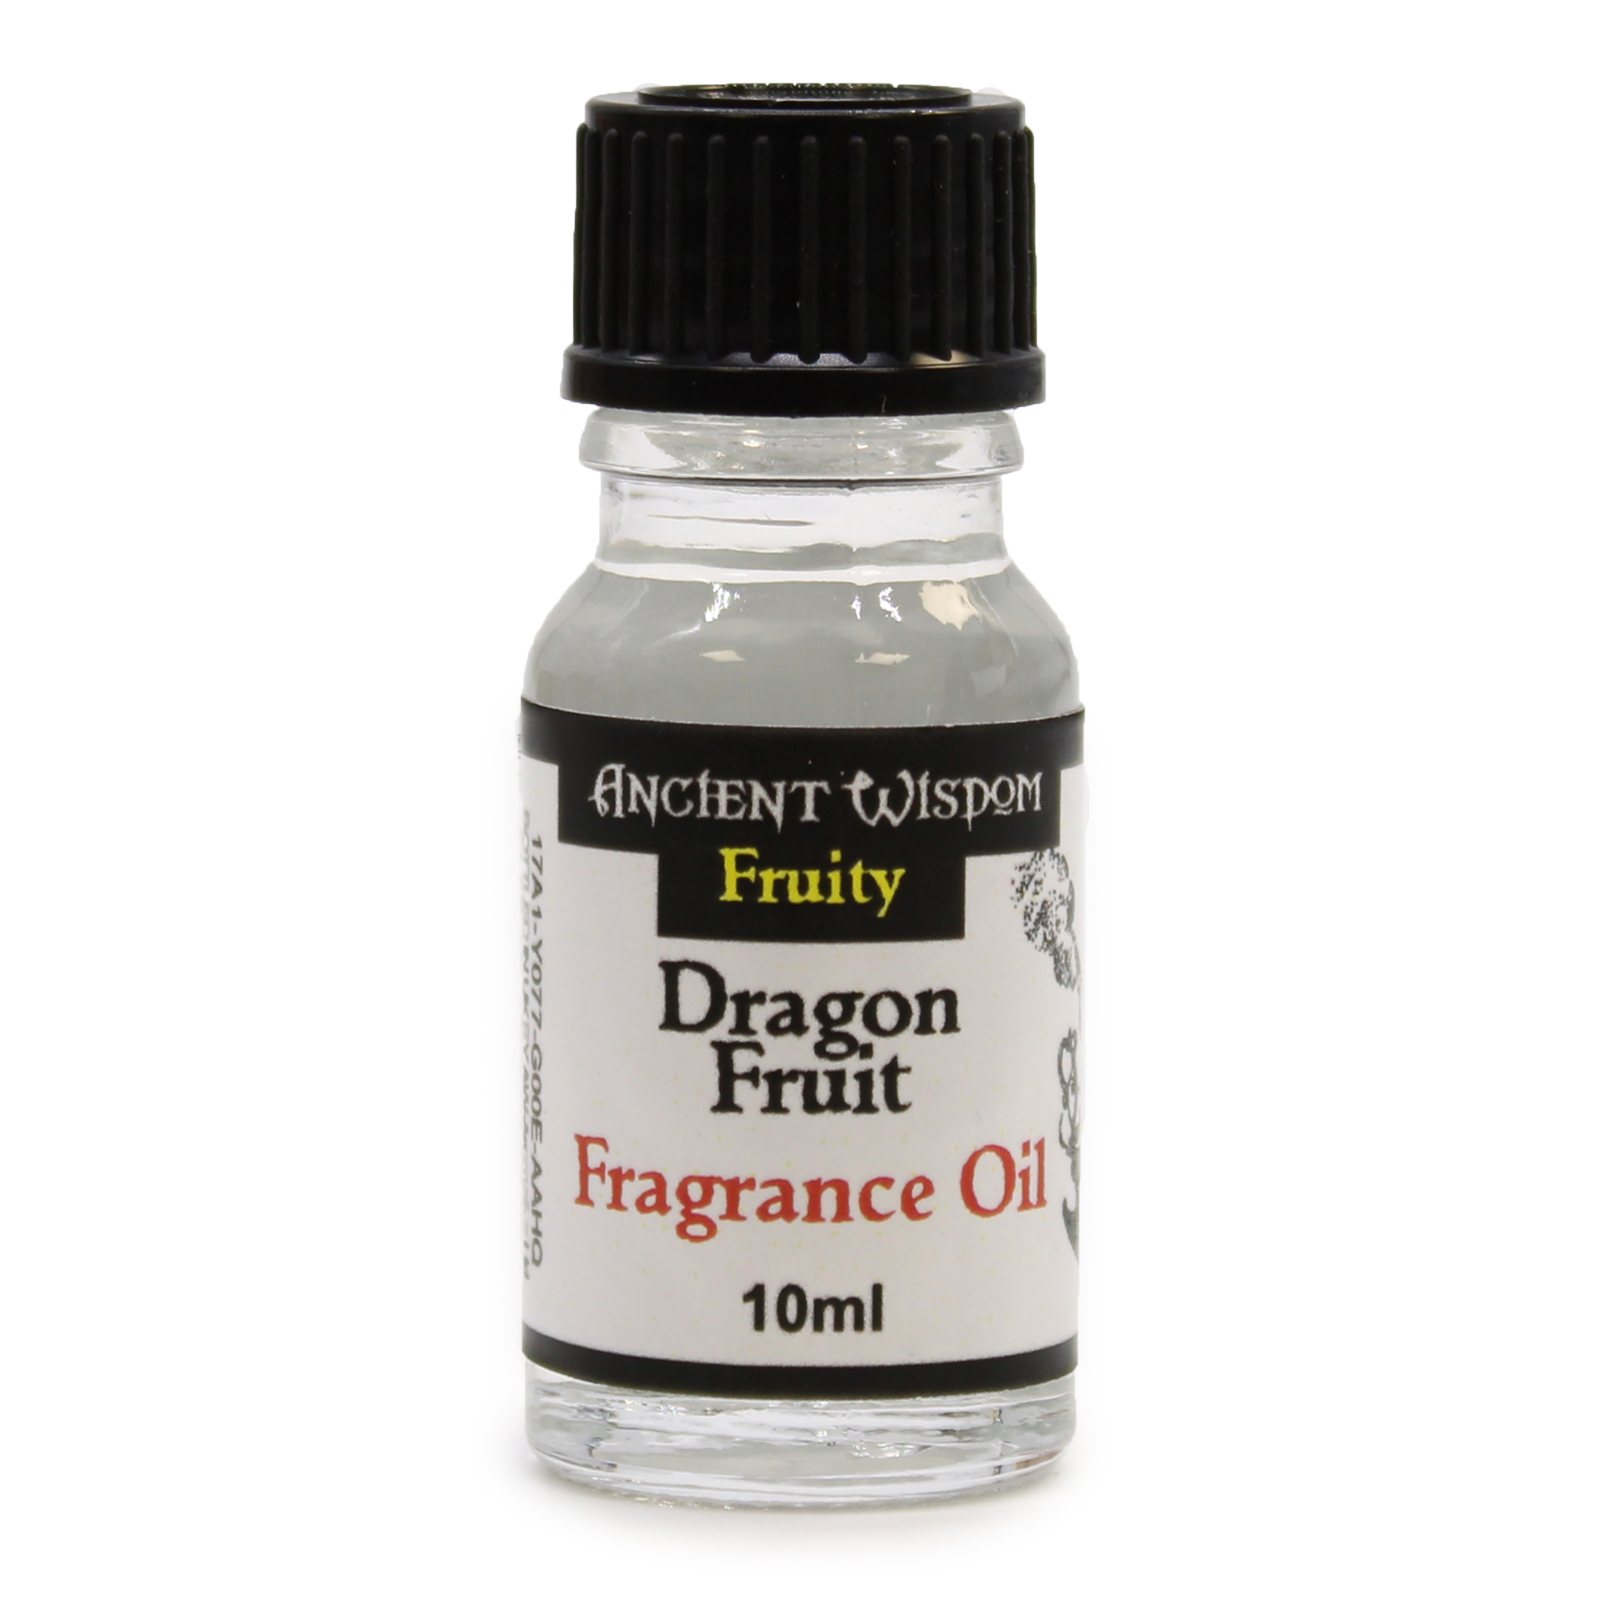 2 x 10ml Dragon Fruit Fragrance Oil Bottles - Click Image to Close